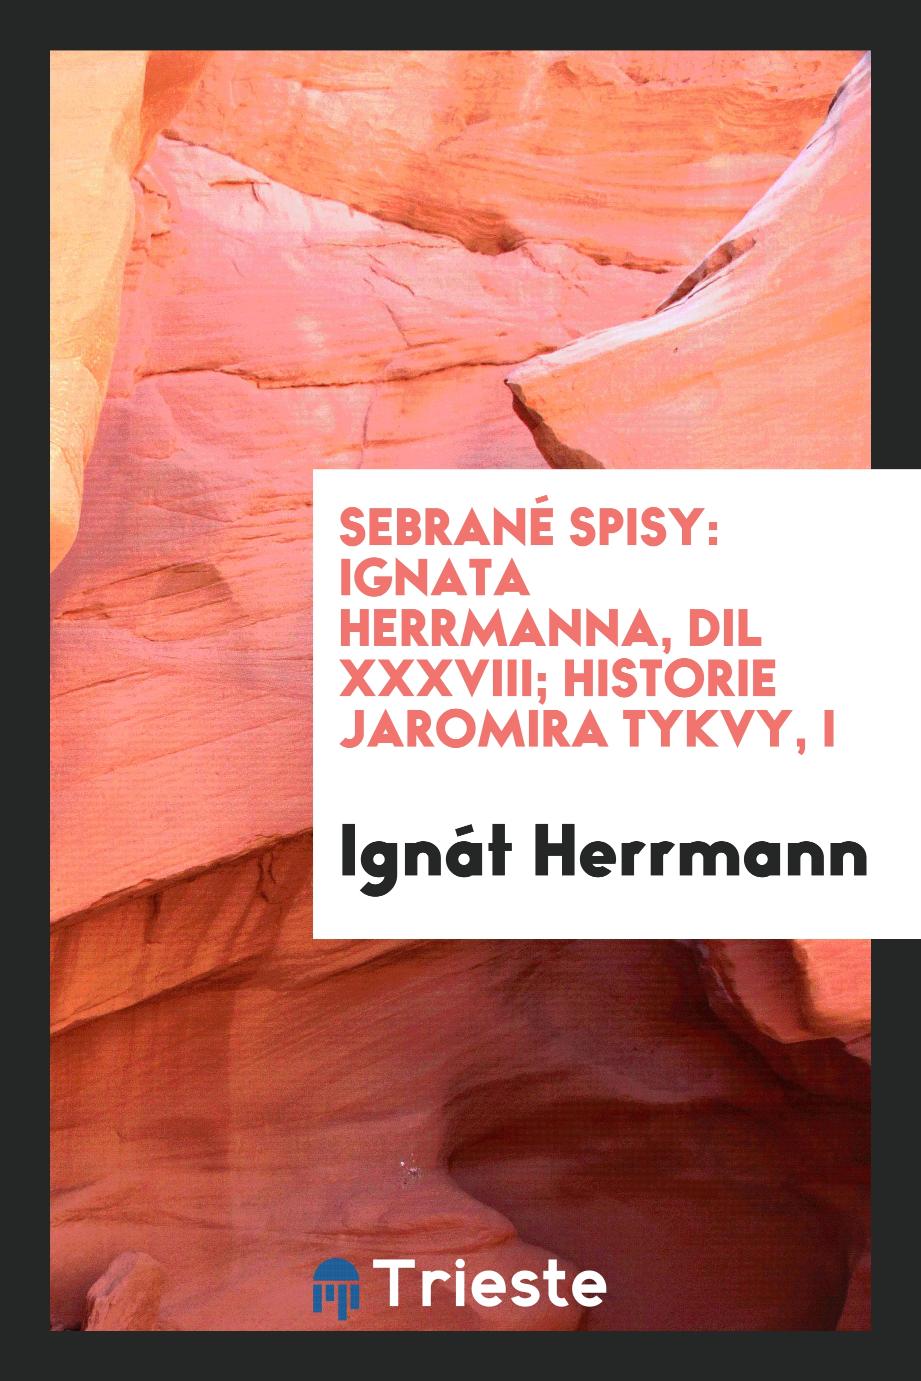 Sebrané Spisy: Ignata Herrmanna, Dil XXXVIII; Historie Jaromira Tykvy, I